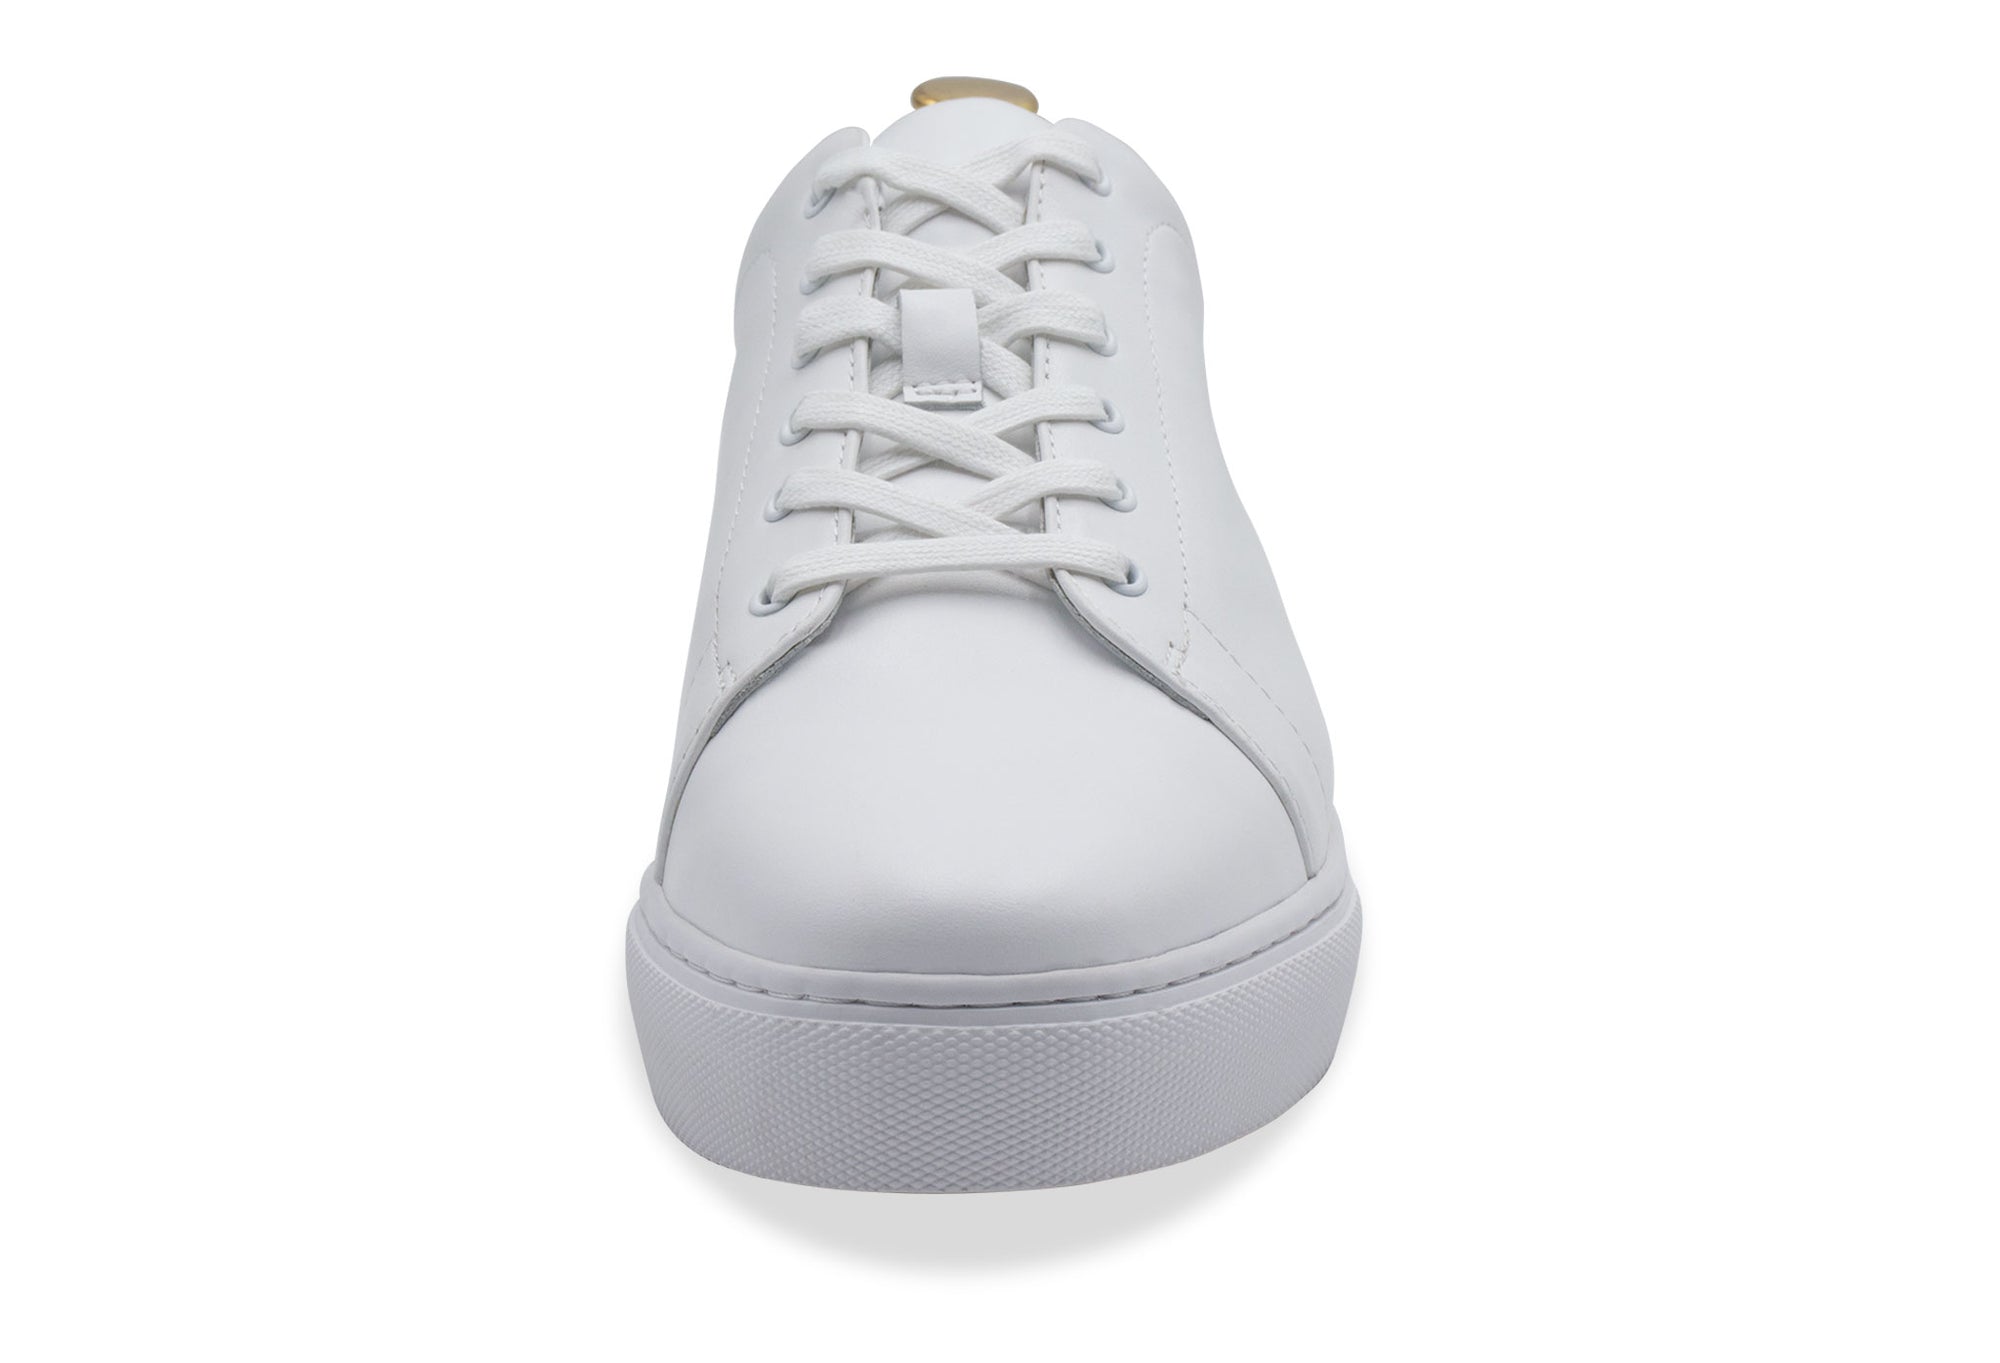 Loreto White/Red Sneakers